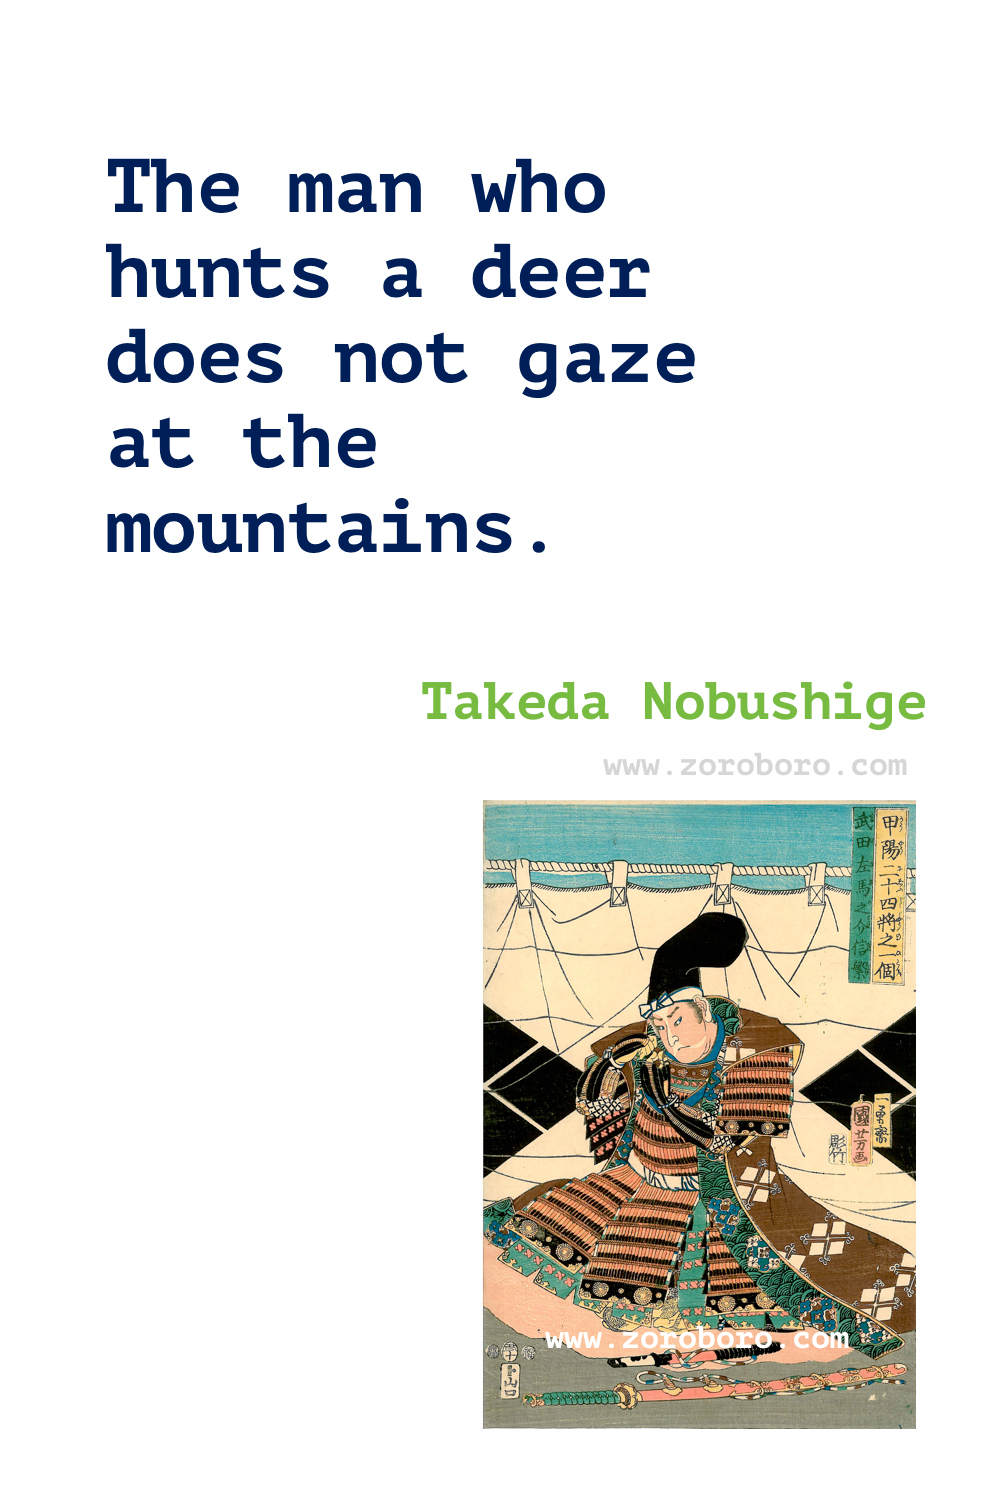 Takeda Nobushige Quotes, Takeda Nobushige Teachings, Takeda Nobushige Warrior Quotes, Takeda Nobushige Samurai Quotes.